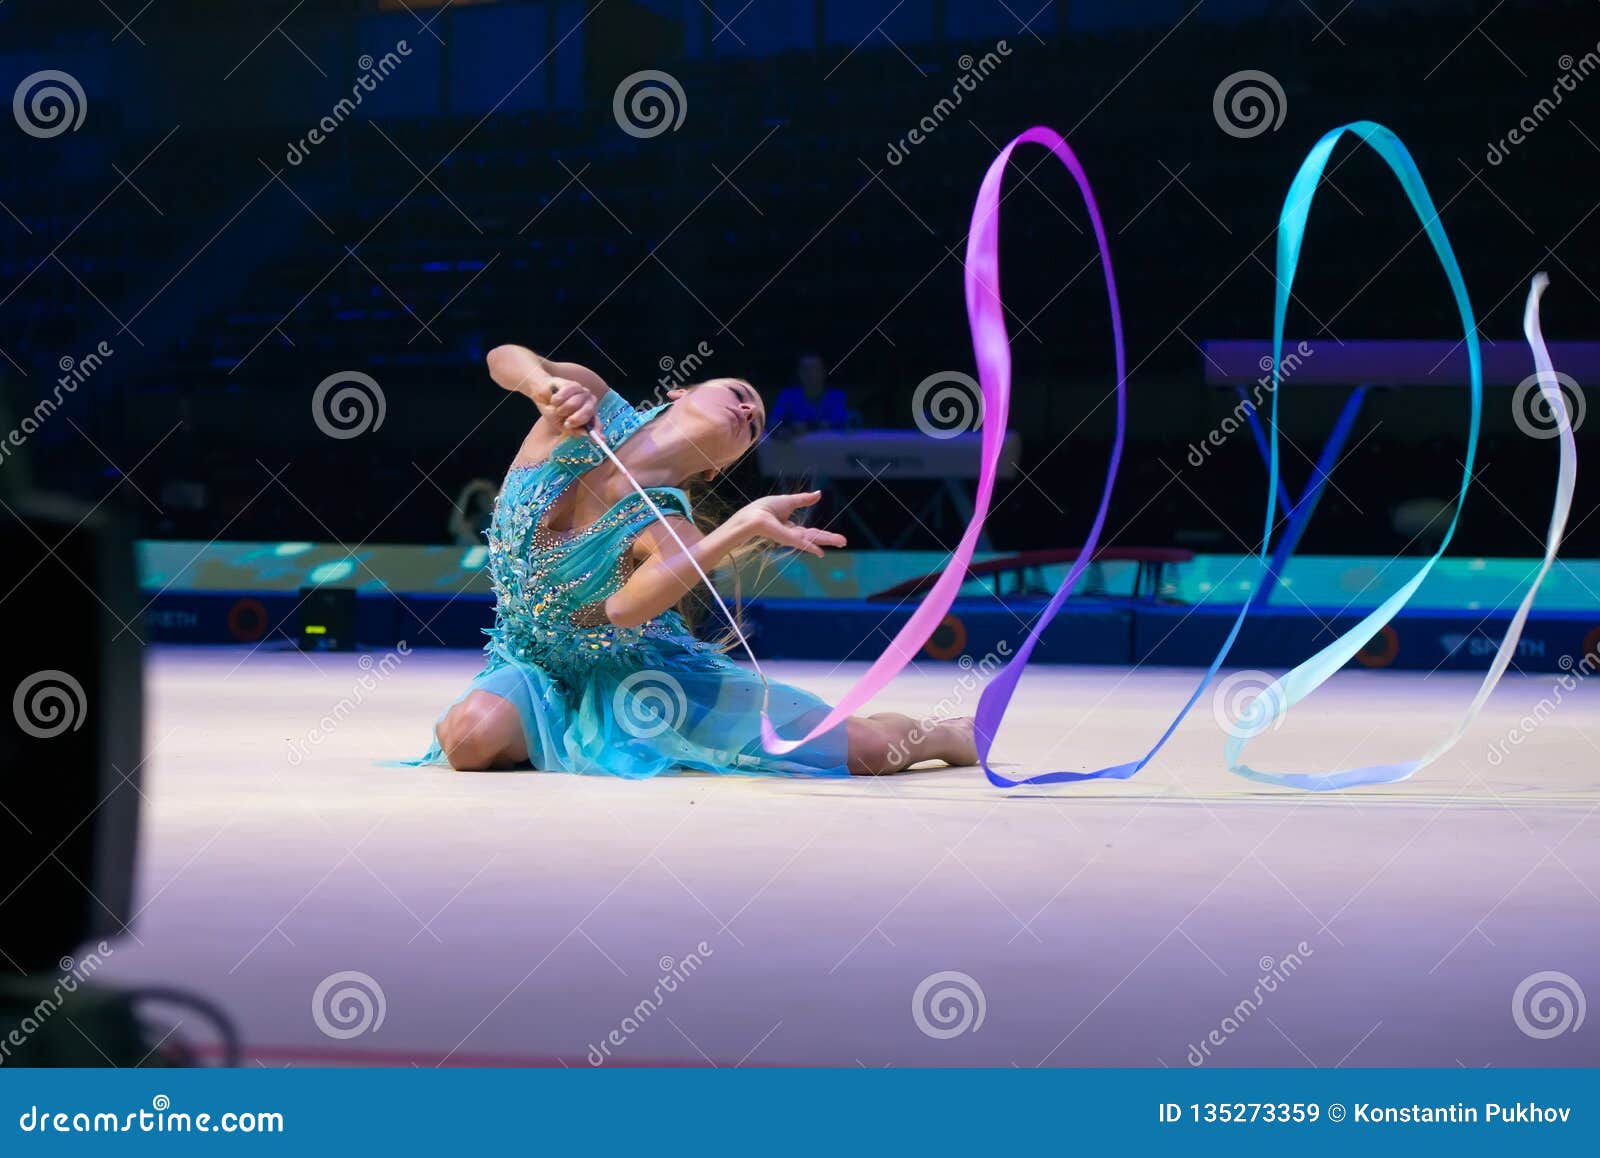 Rhythmic Gymnastics Performance With Tape Editorial Stock Image